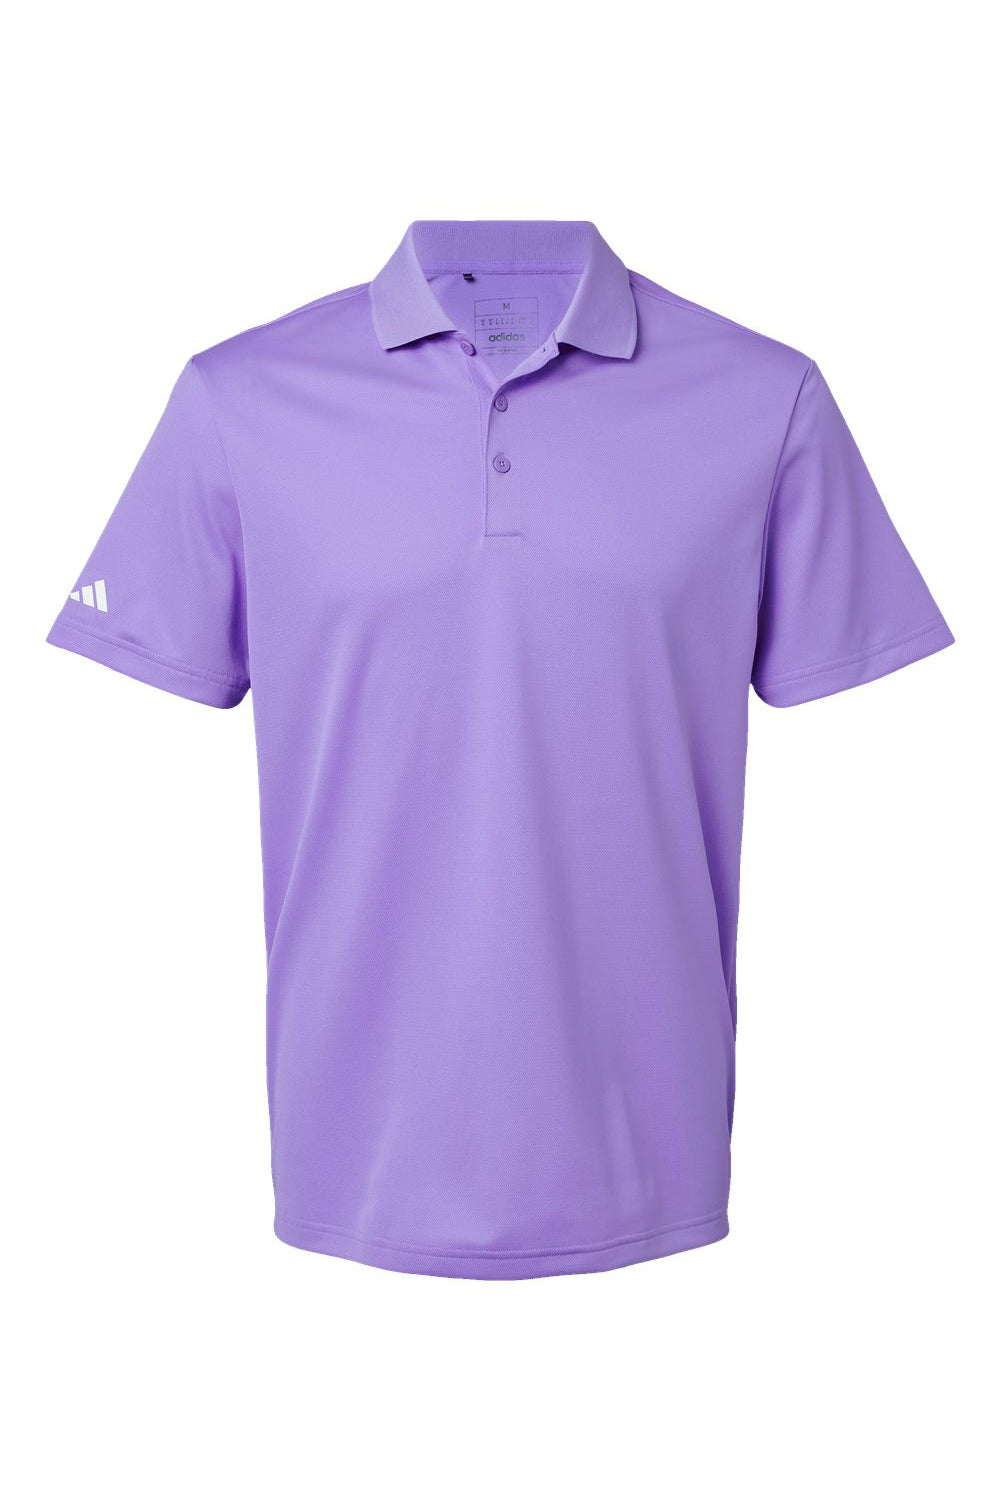 Adidas A430 Mens UV Protection Short Sleeve Polo Shirt Light Flash Purple Flat Front